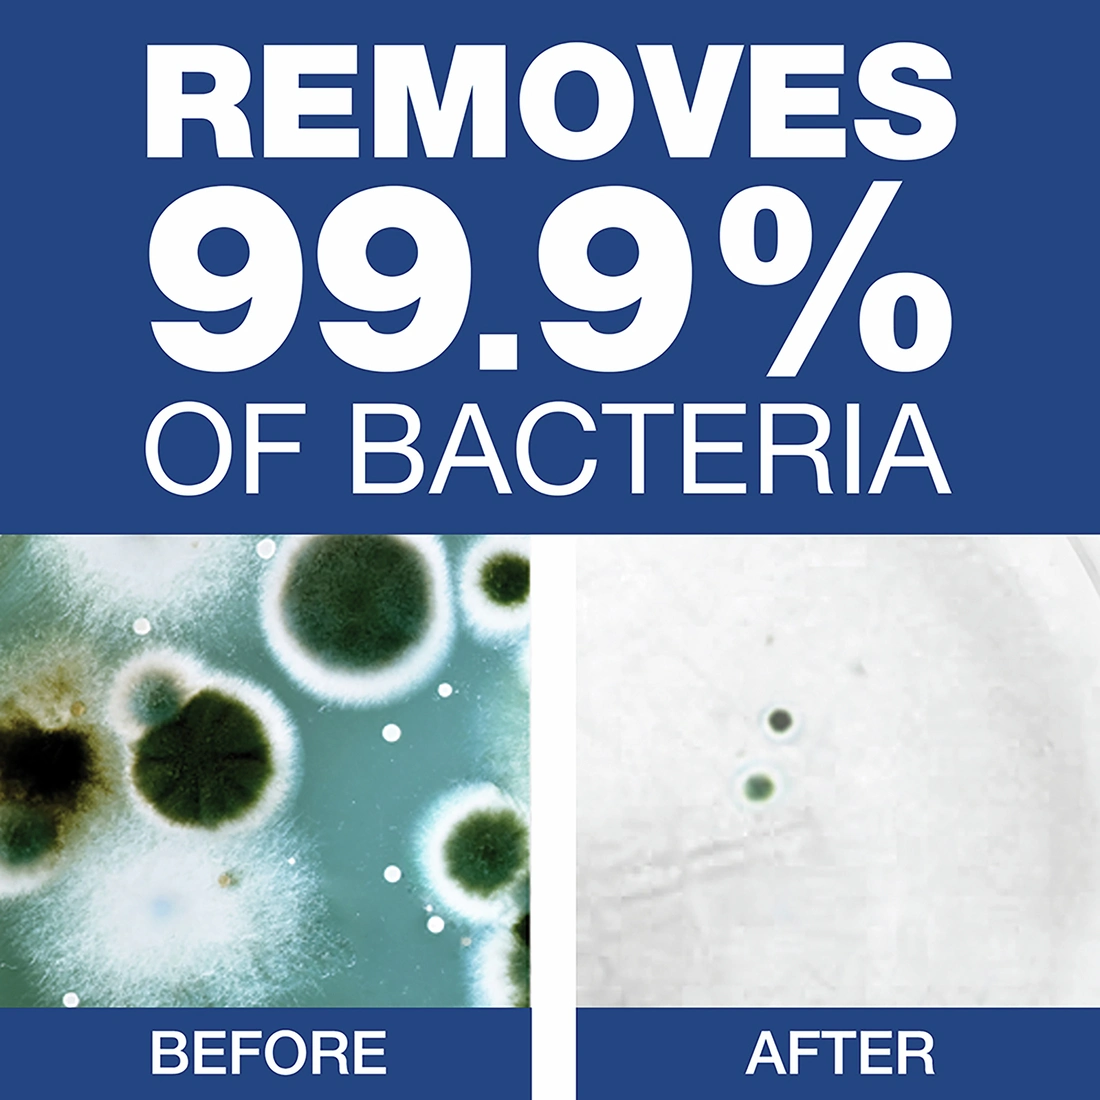 Safeguard Liquid Anti-Bacterial Hand Soap